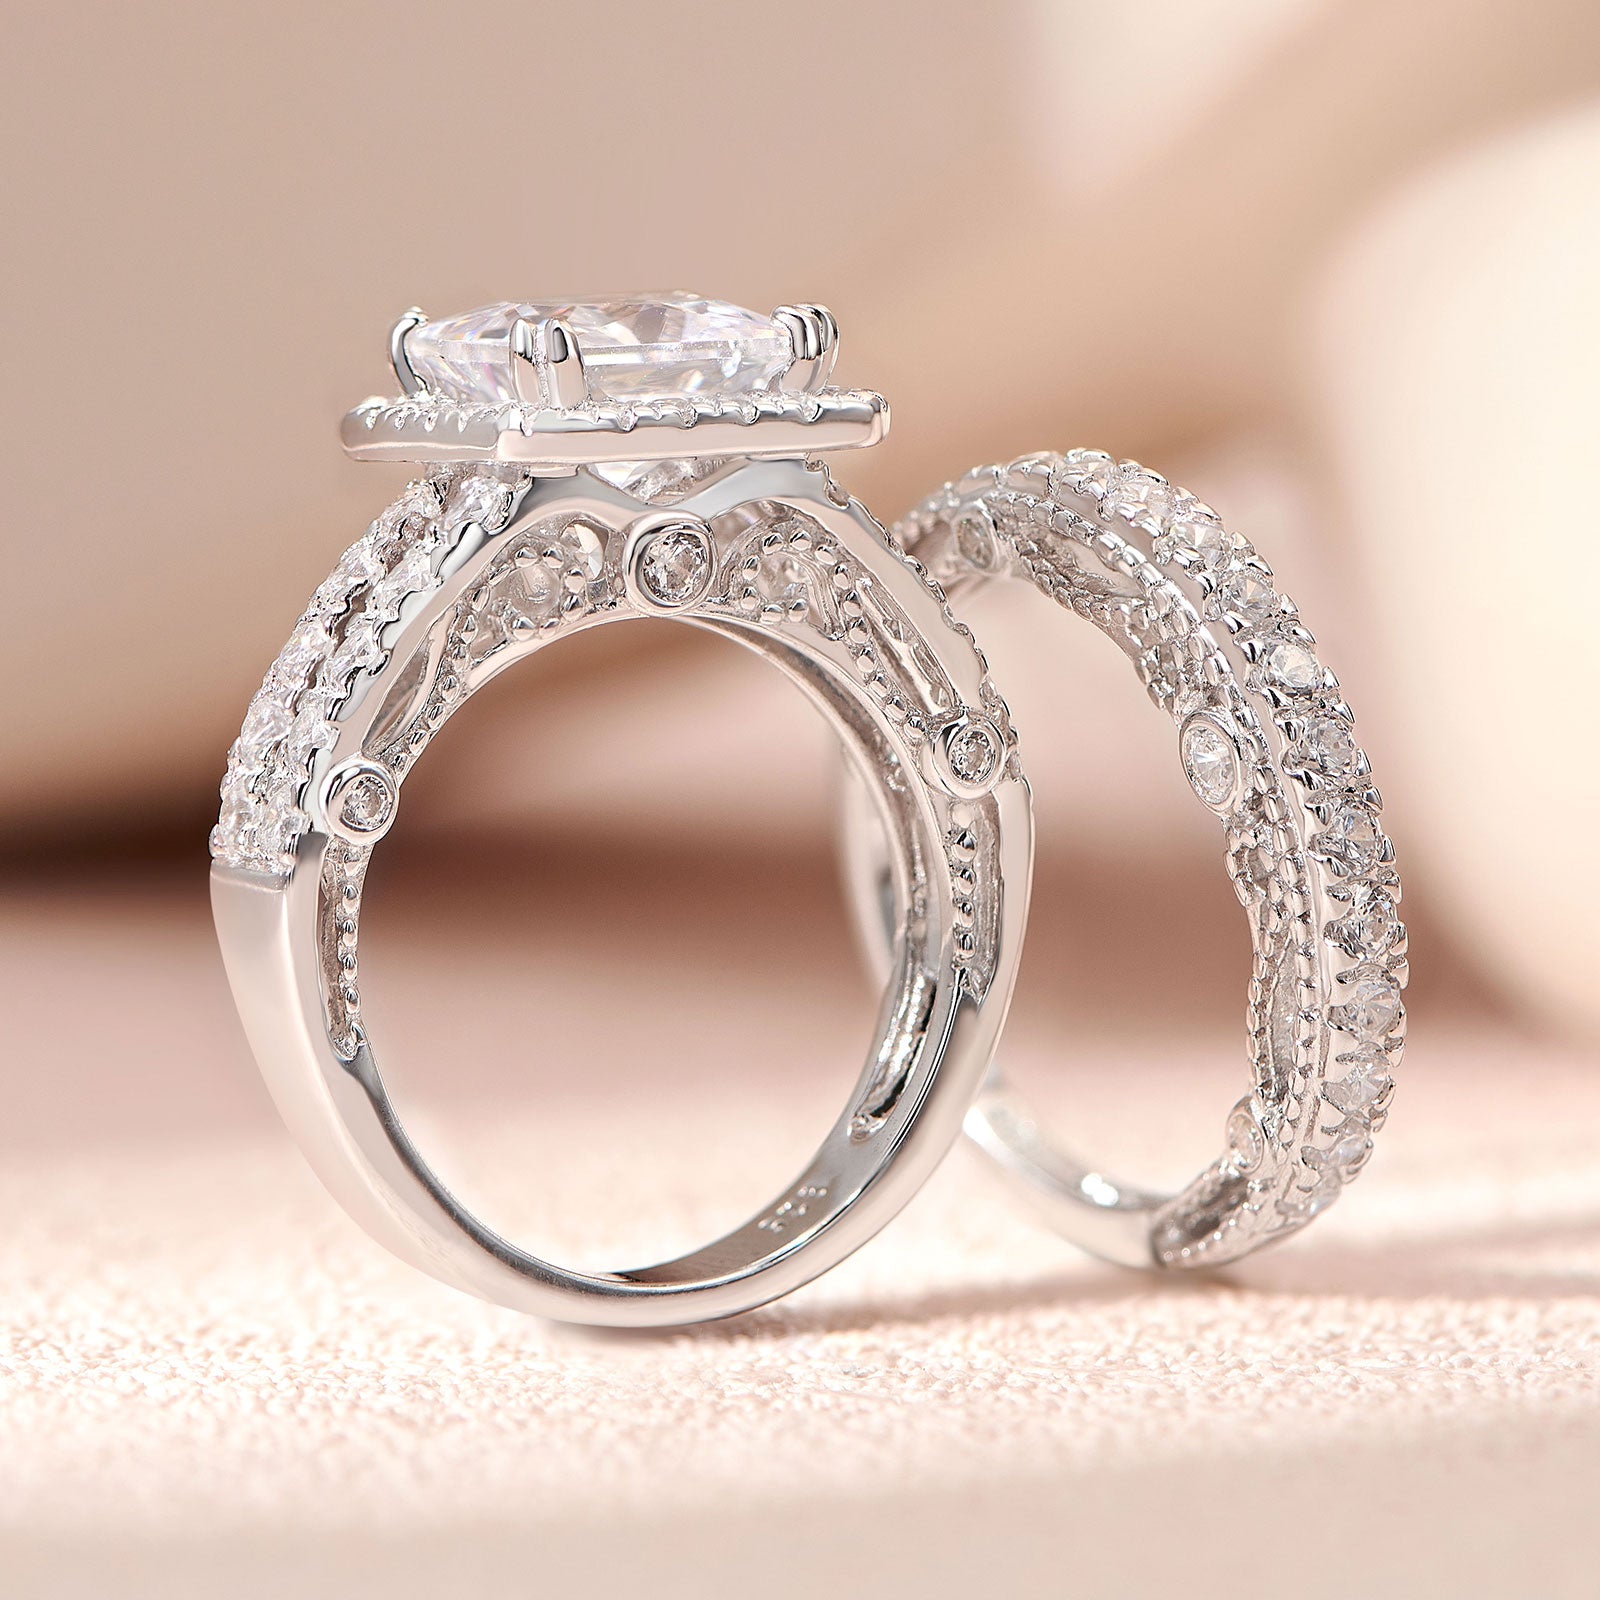 2 Pcs Vintage Wedding Rings Set Solid 925 Sterling Silver 4Ct Princess Cut - todayshealthandwellnessshop